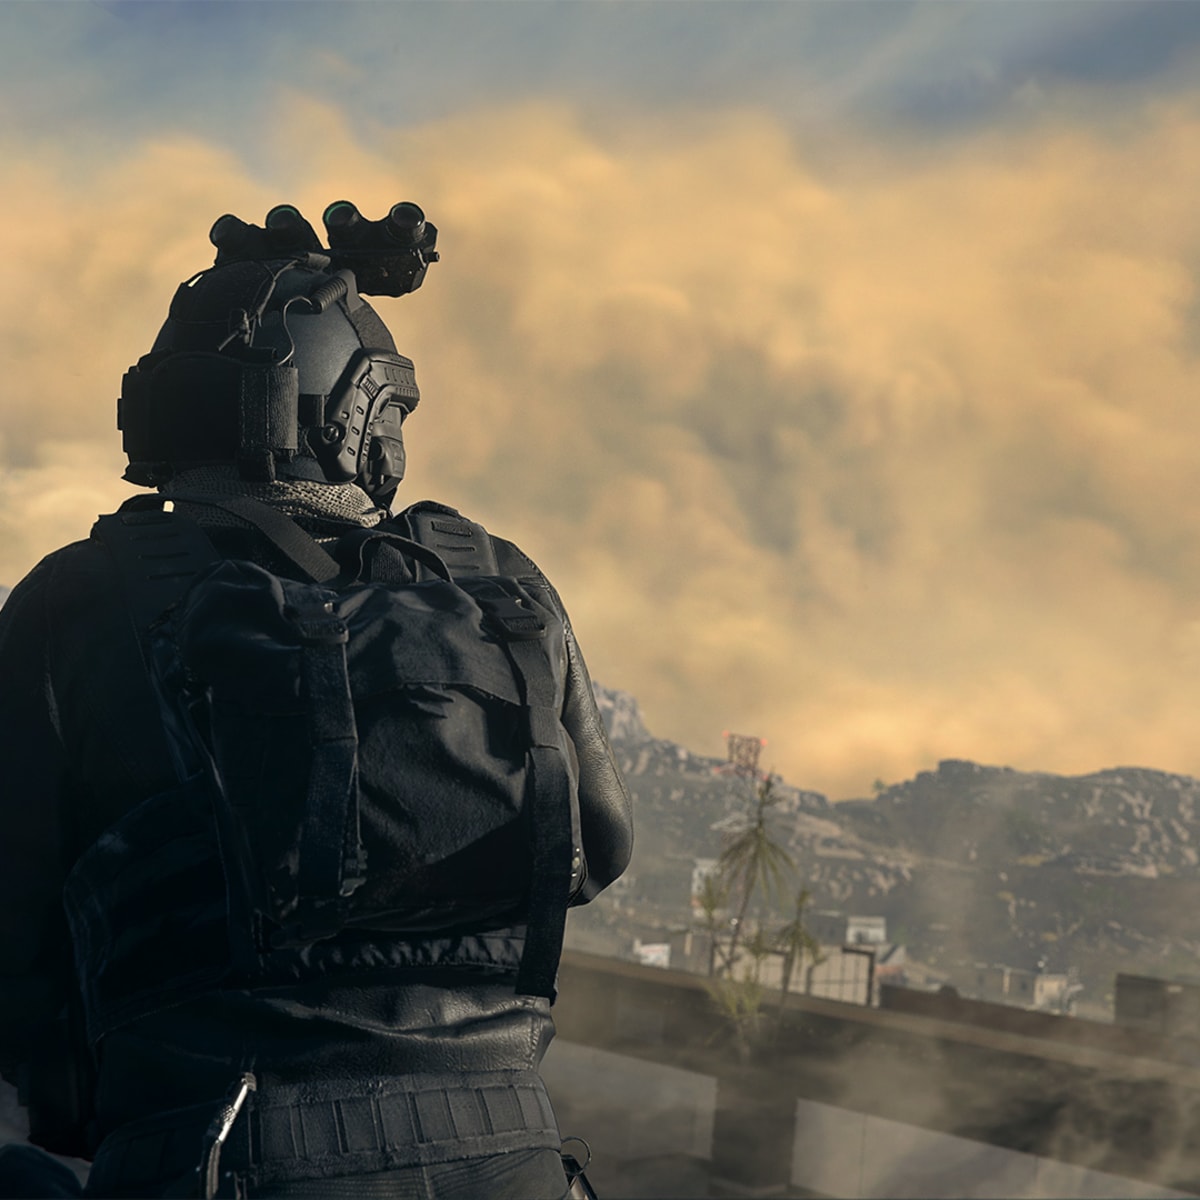 A Deep Dive on Ashika Island, the New Resurgence Map in Season 02 of Call  of Duty®: Warzone™ 2.0